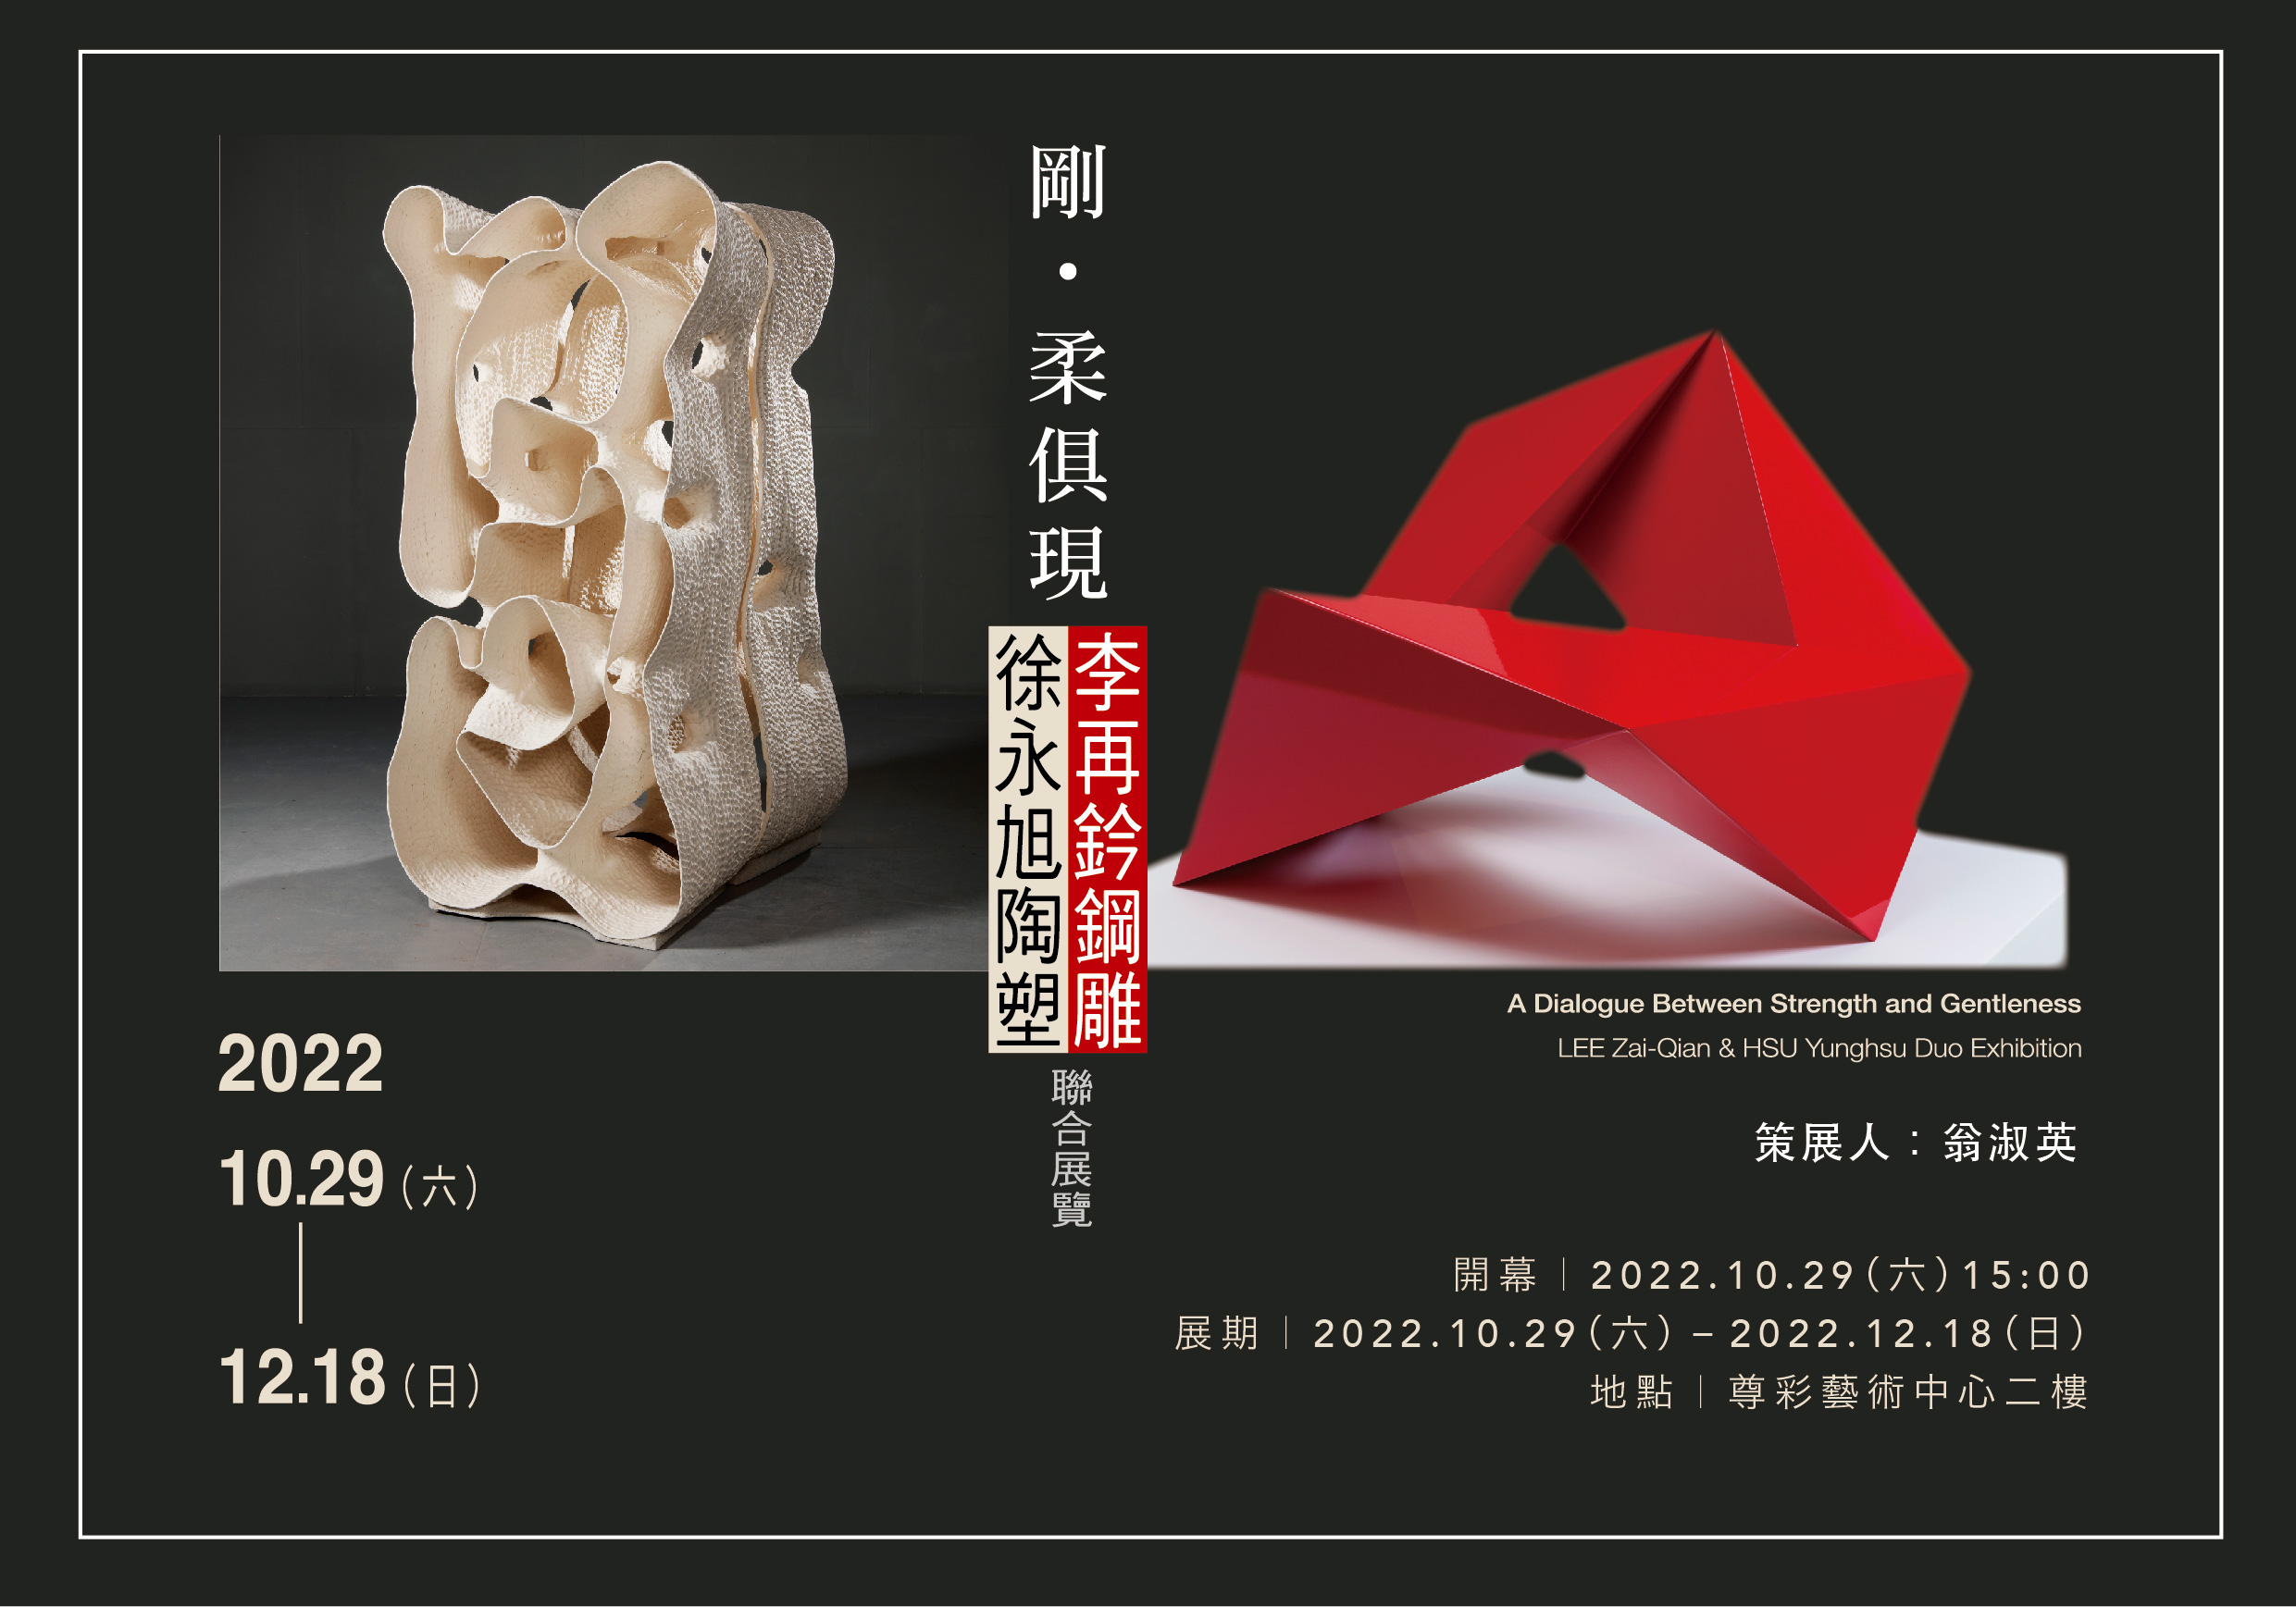 A Dialogue Between Strength and Gentleness — LEE Tsai-Chien & HSU Yunghsu Duo Exhibition